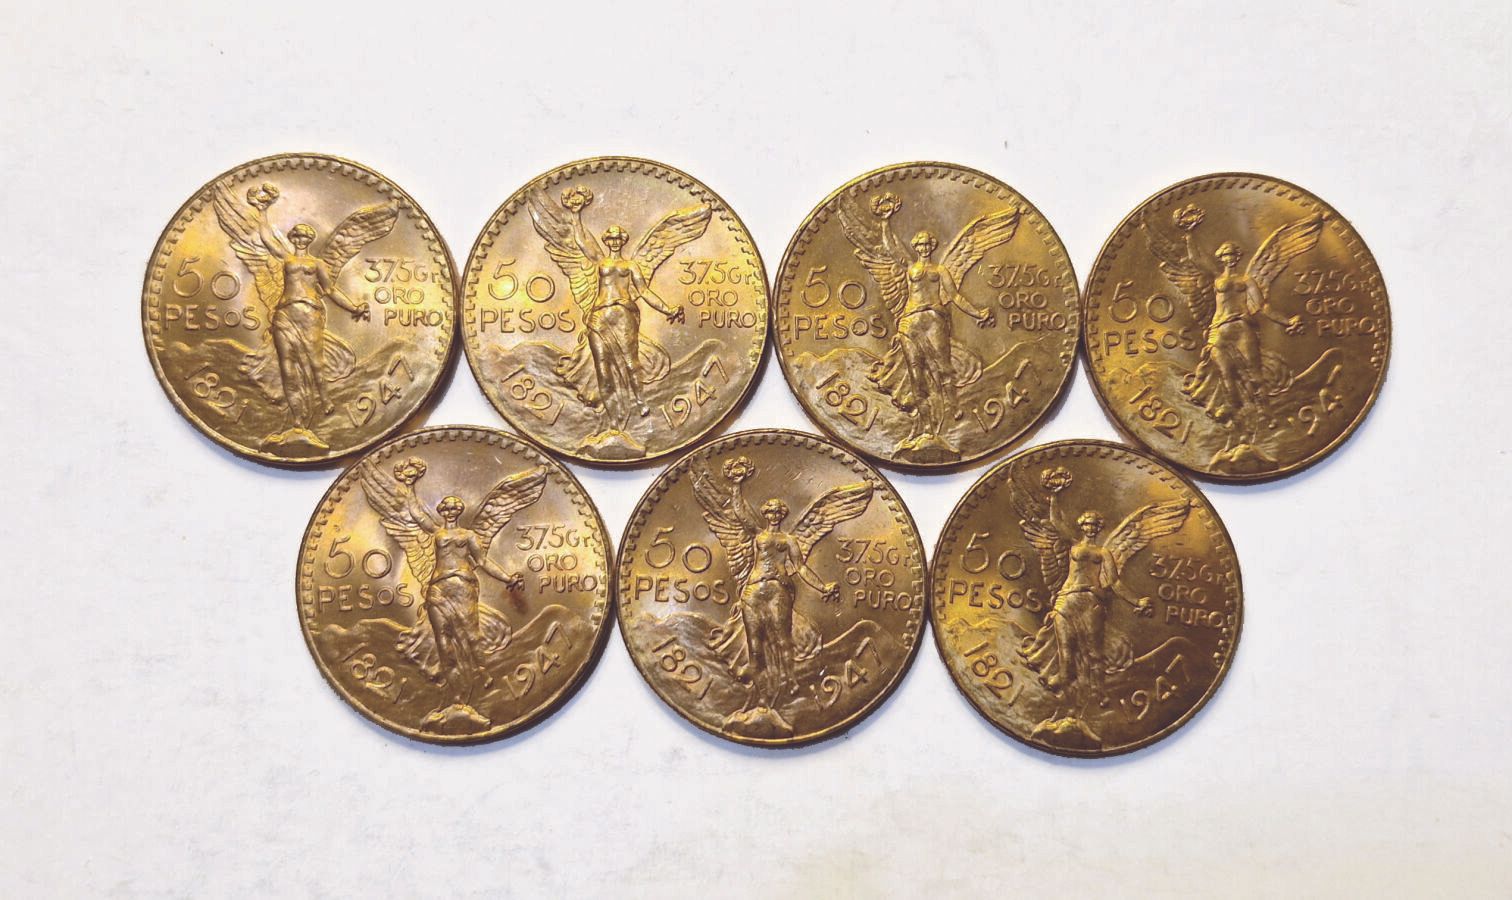 Null 墨西哥。1947年50比索的7枚硬币拍品。 SUP至SPL

出于安全考虑，金条和金币被保存在银行保险库中，并将在指定时间内出售。